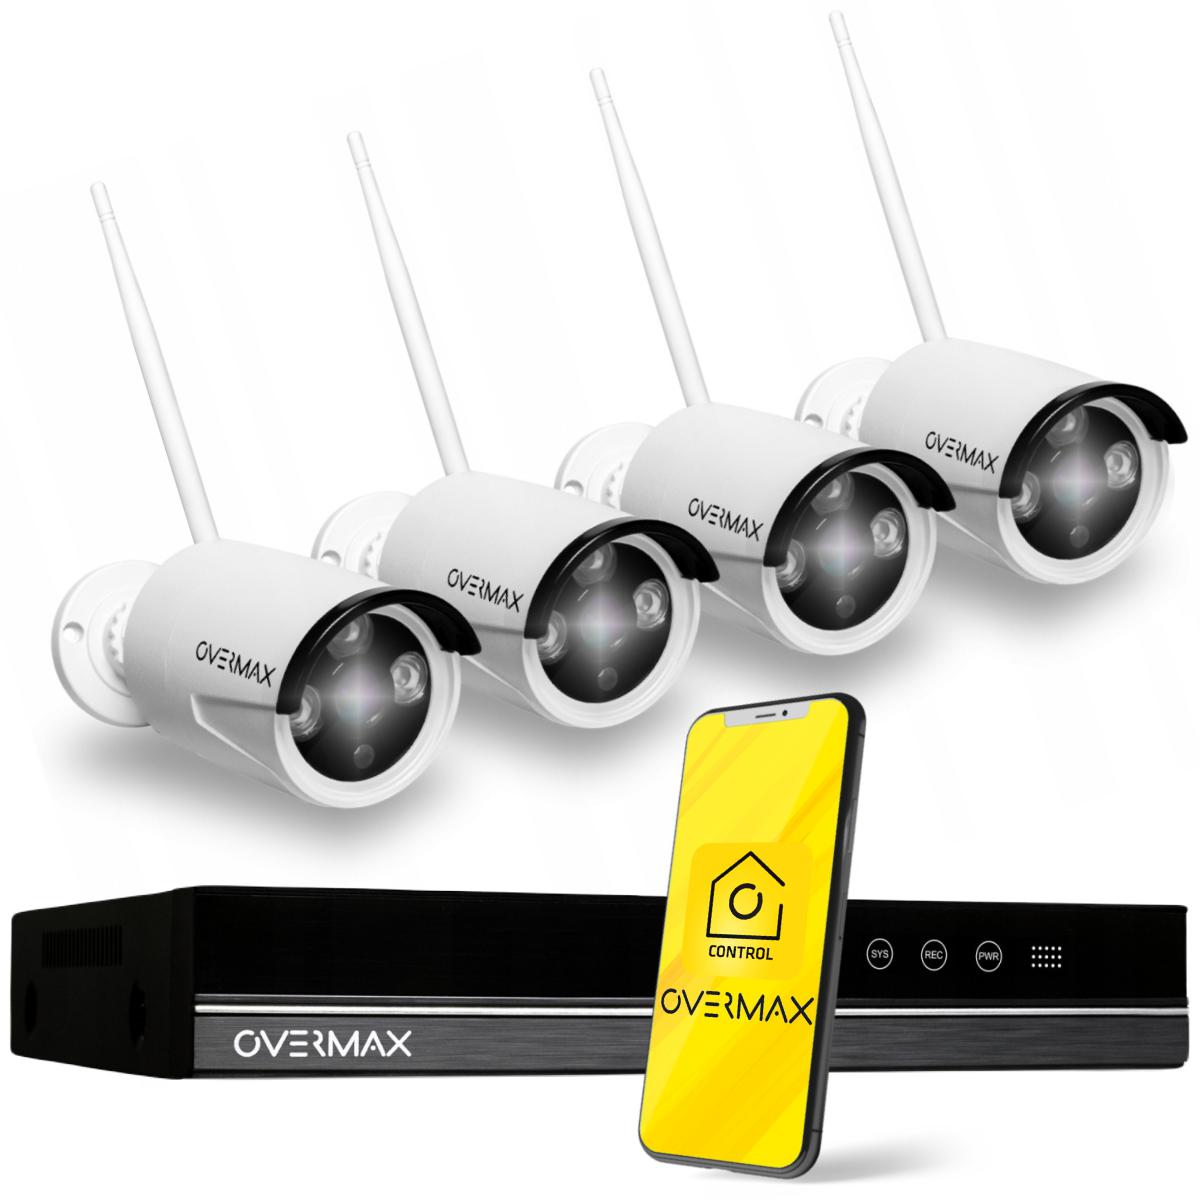 Zestaw monitoringu IP z 4 kamerami Full HD Wi-Fi 2MPx i rejestratorem NVR Overmax Camspot 4.0 - najważniejsze cechy: